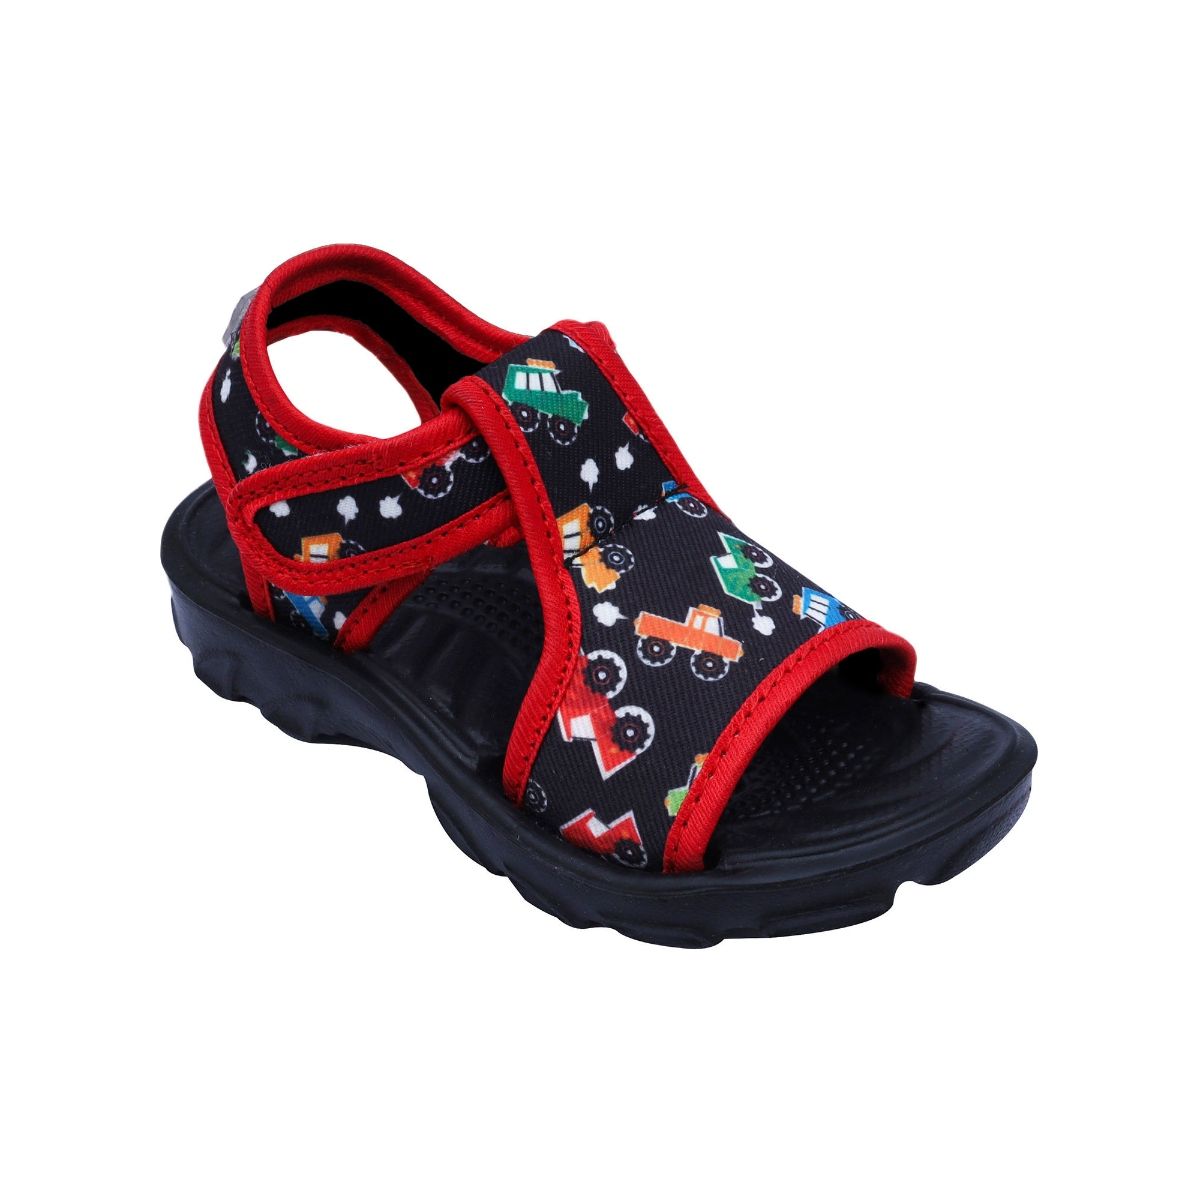 Footmates Childrens Shoes - Waterproof Tide Sandals - Apple Red